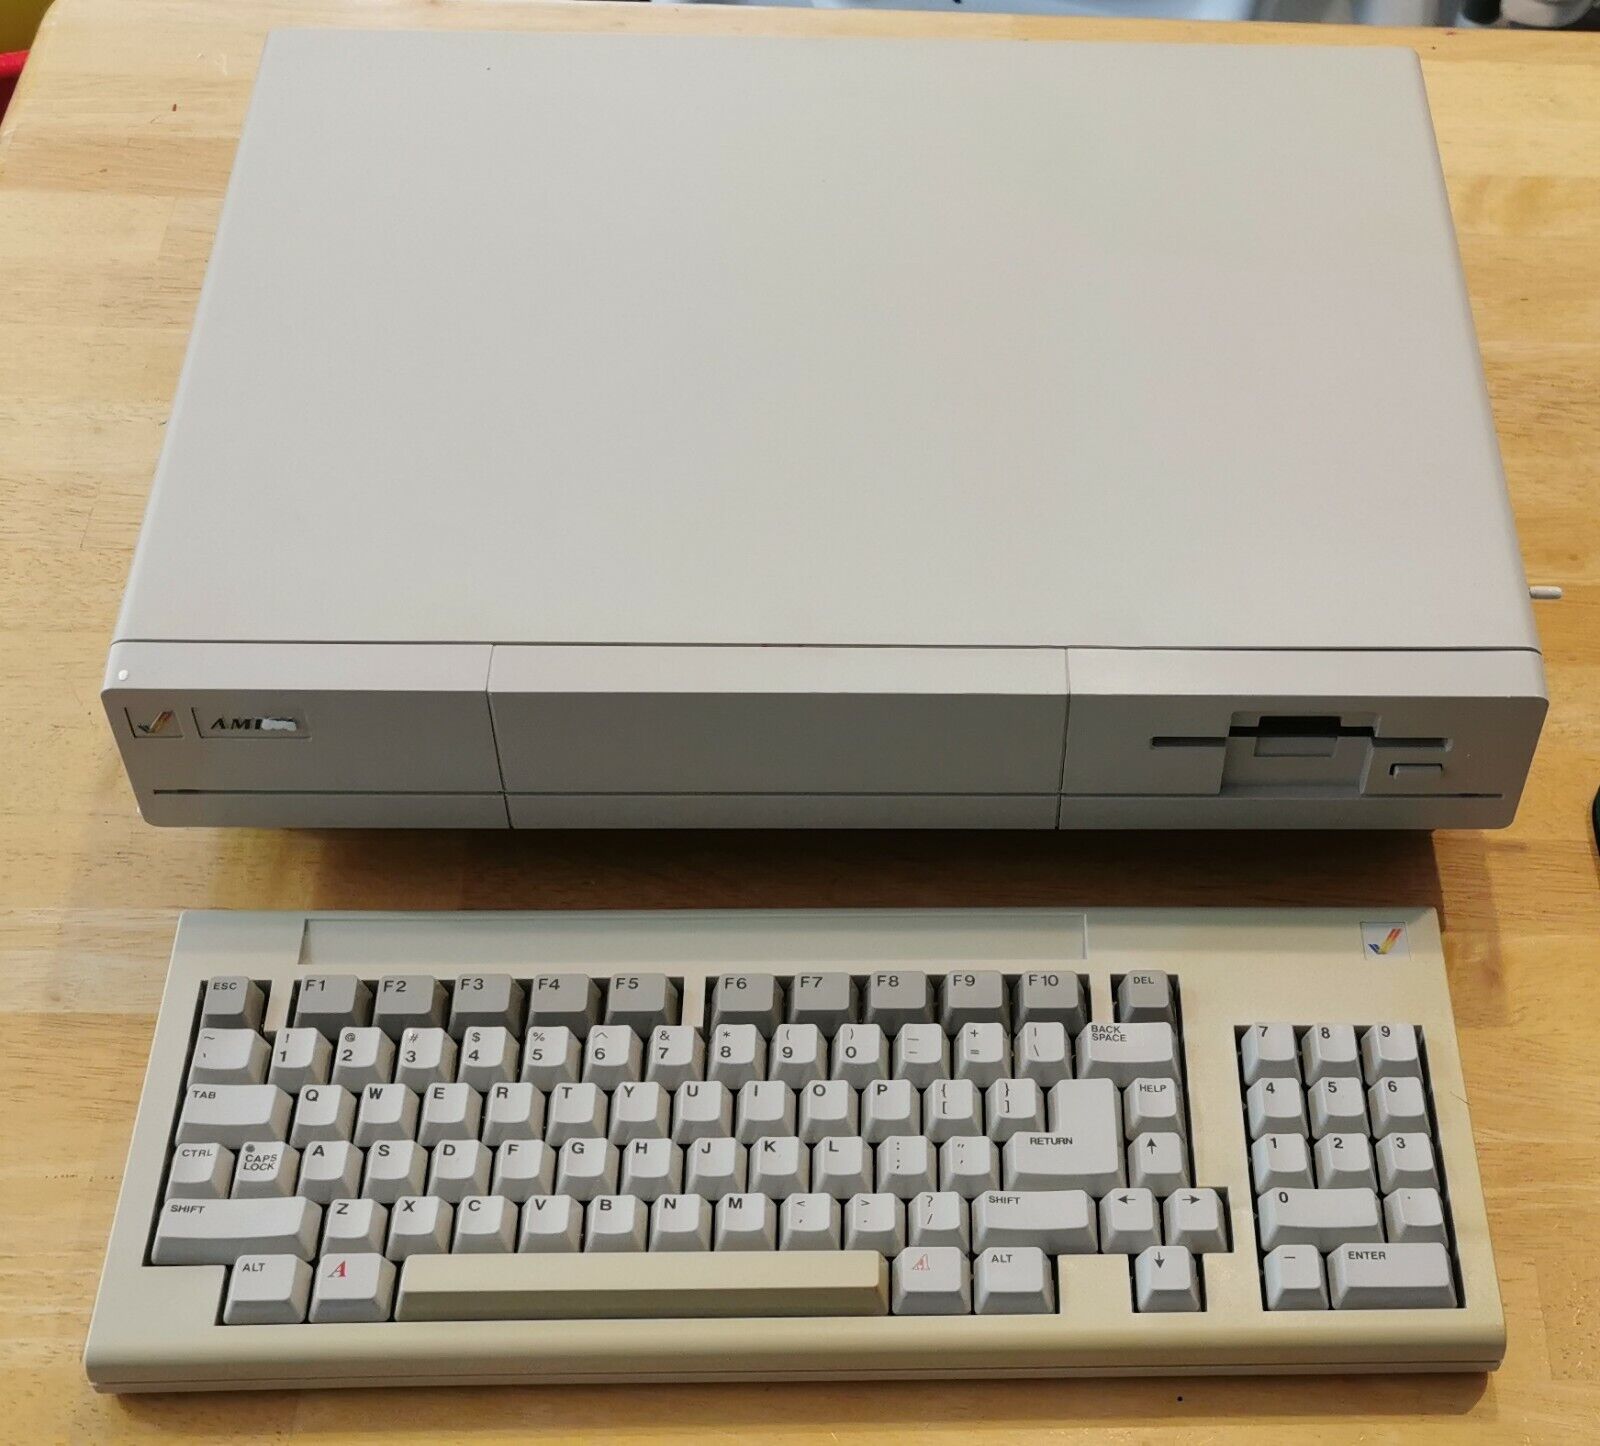 Commodore Amiga 1000 Personal Computer - with